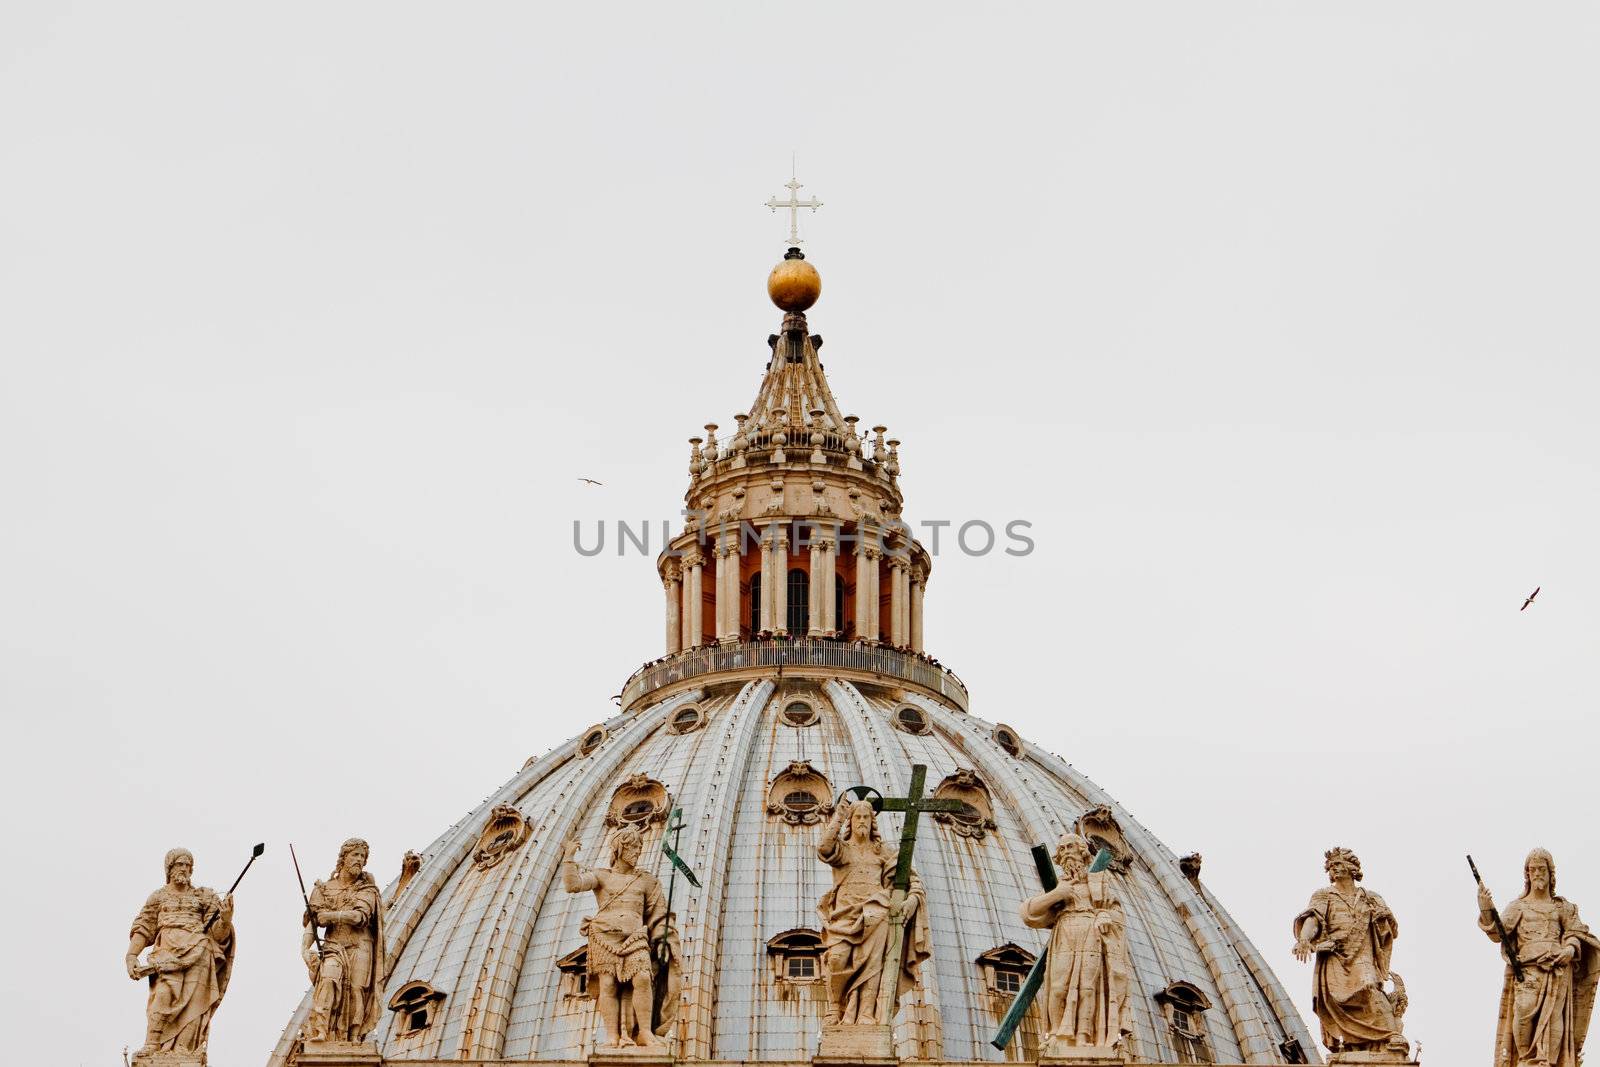 It was taken in Vatican, Rome, Italy 